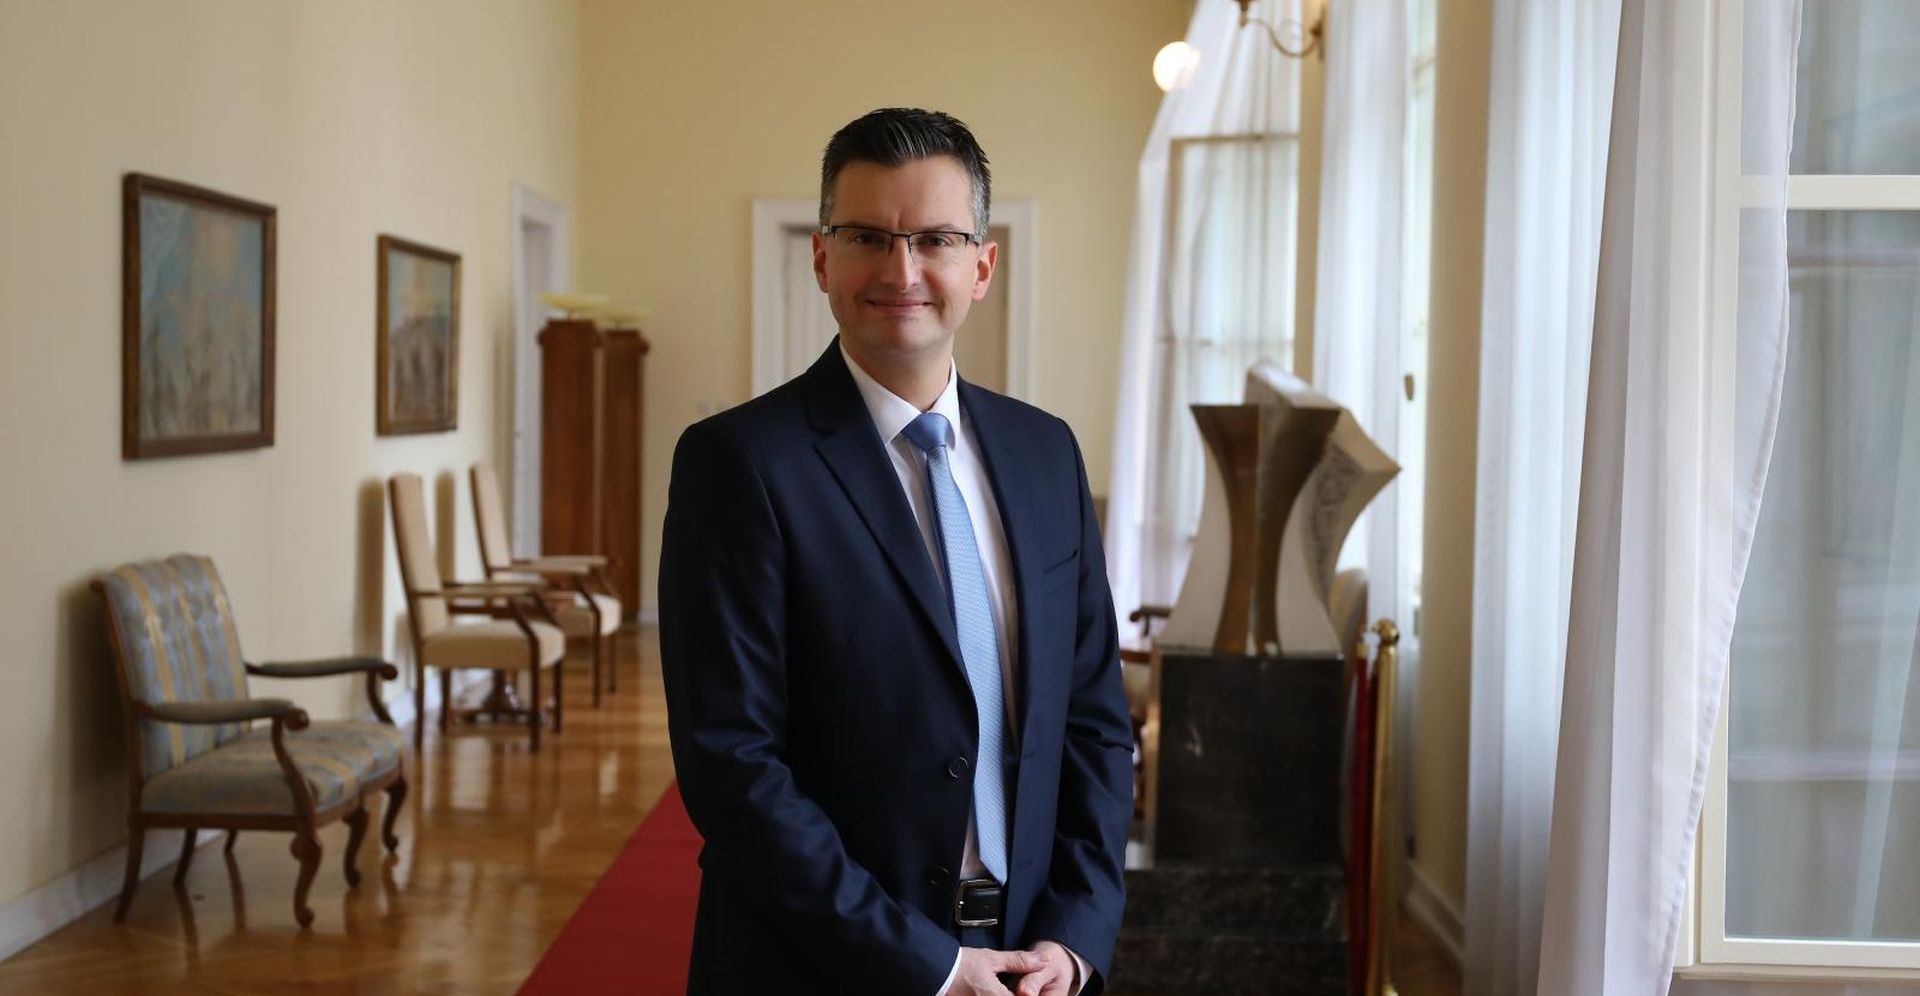 04.09.2018., Ljubljana- Premijer Republike Slovenije, Marjan Sarec.
lista. Photo: Boris Scitar/Vecernji list/PIXSELL